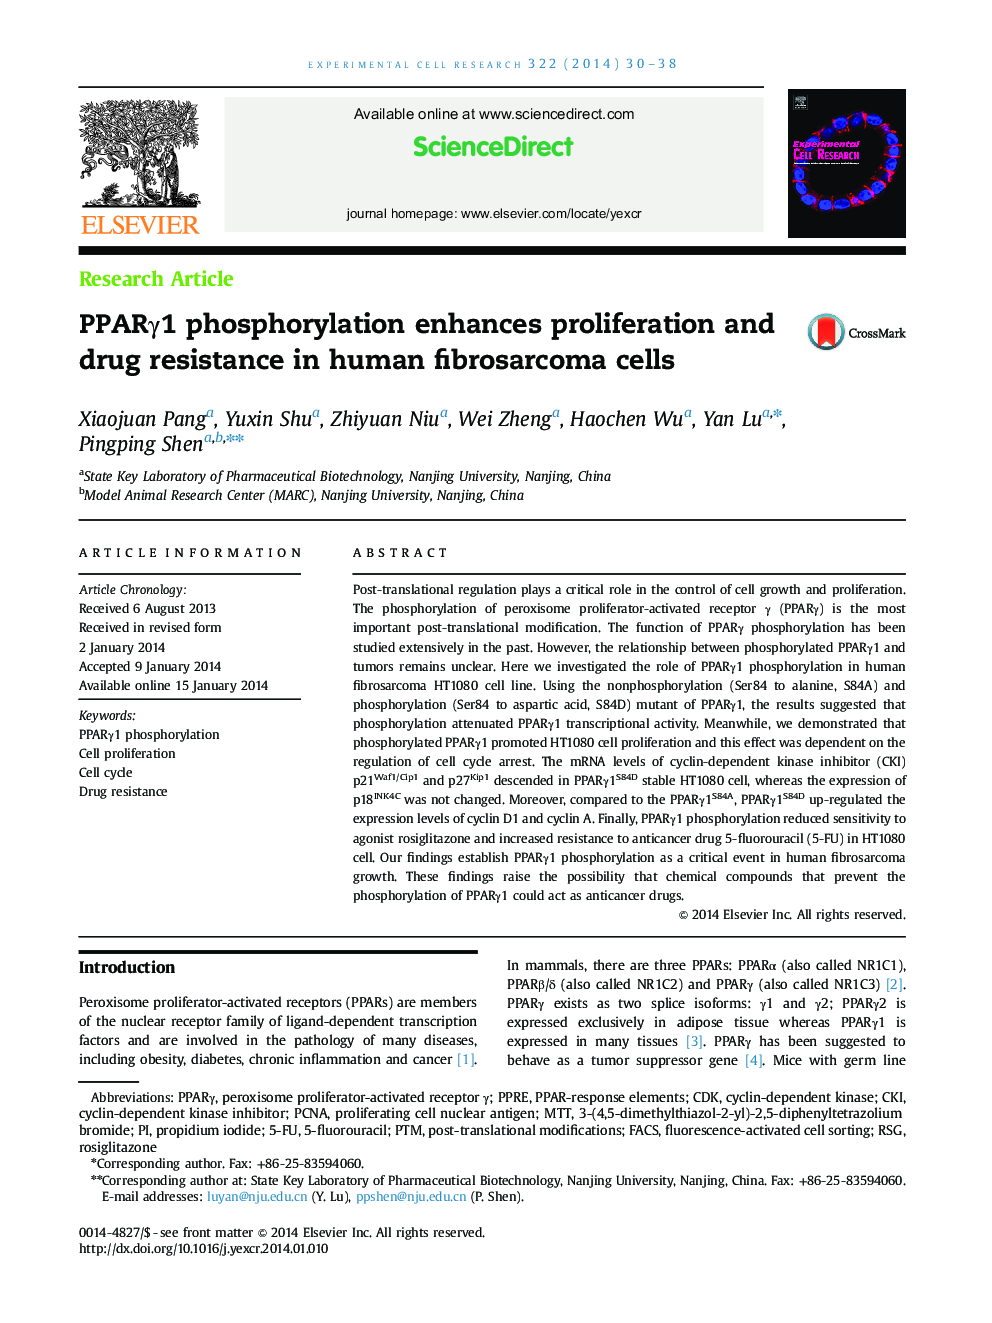 PPARÎ³1 phosphorylation enhances proliferation and drug resistance in human fibrosarcoma cells